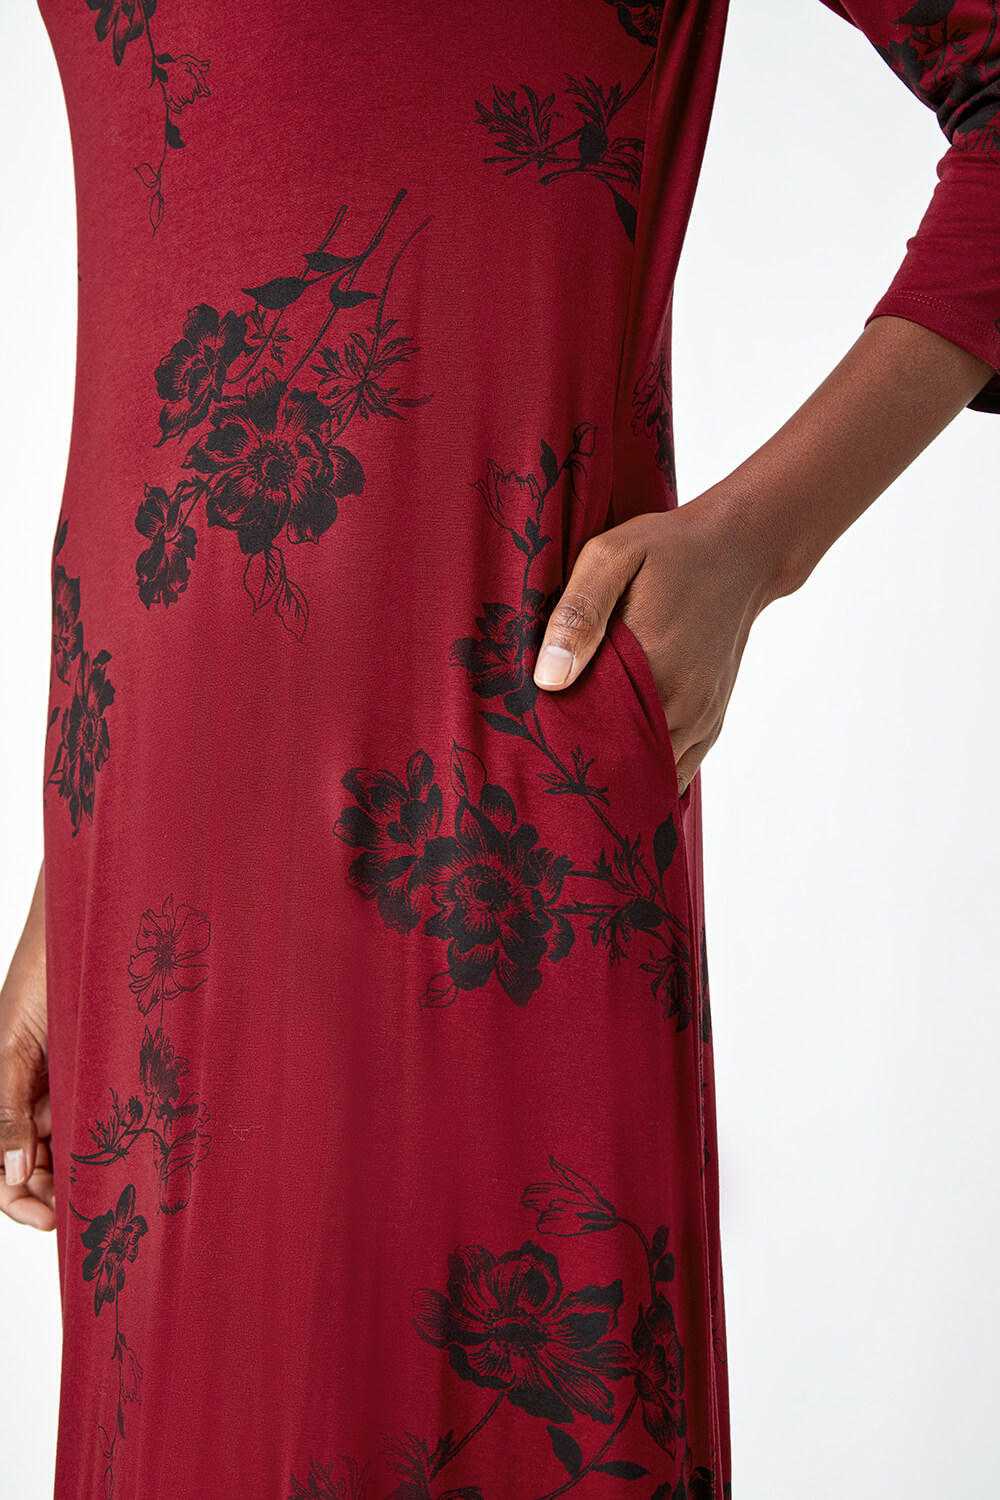 Wine Floral Pocket Detail Midi Stretch Dress, Image 5 of 5